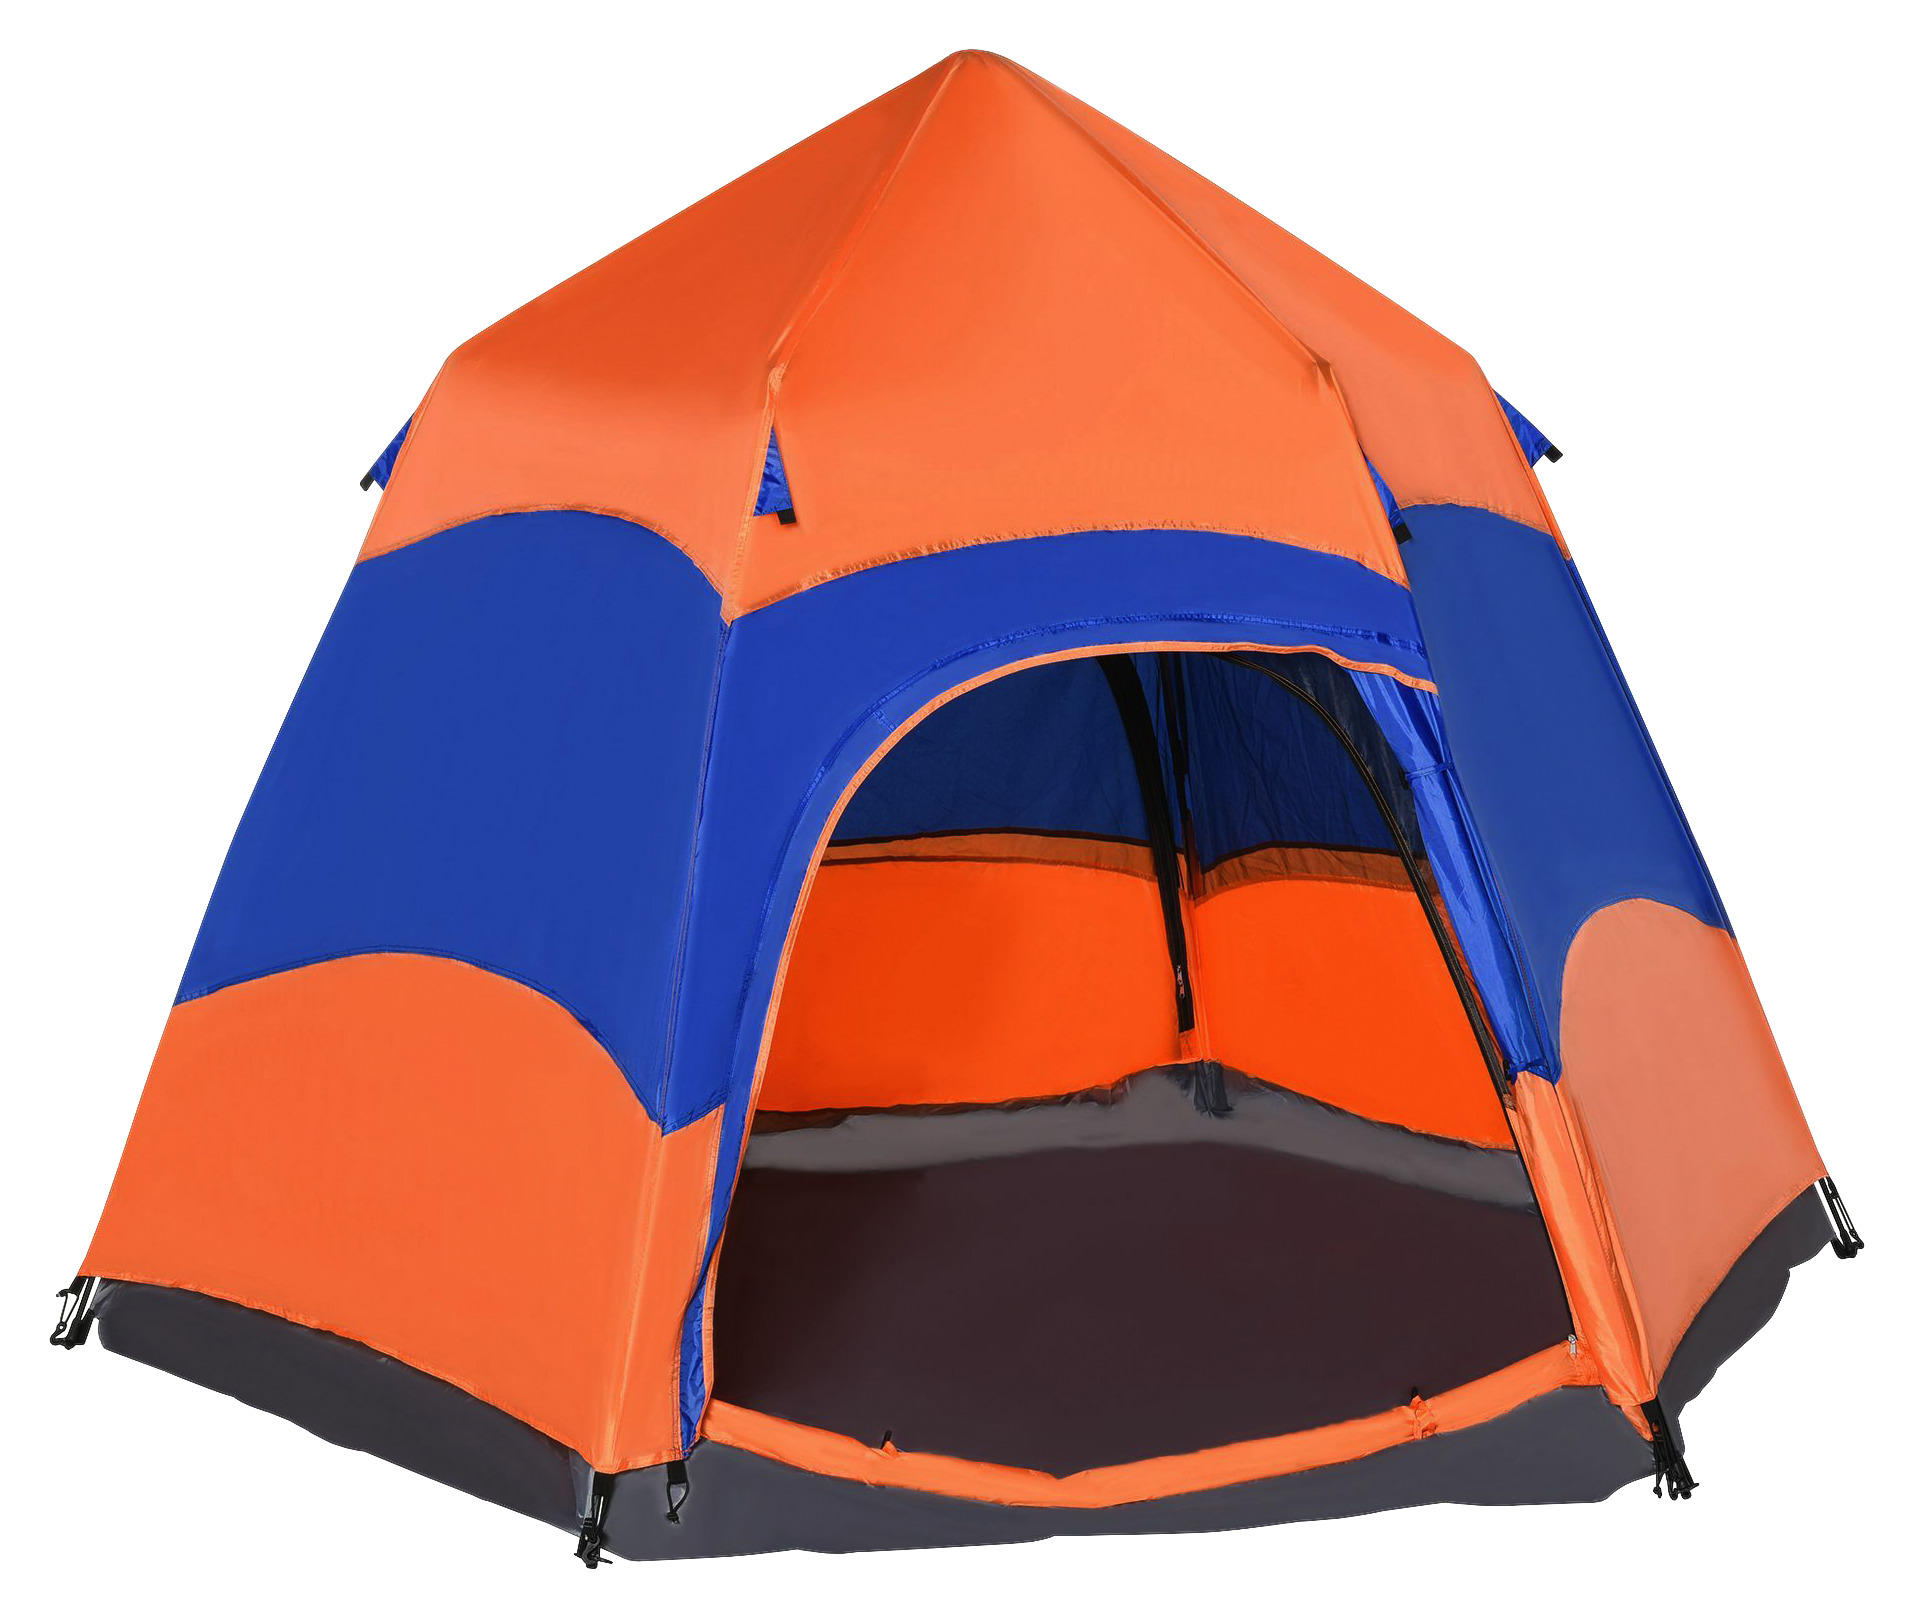 Outsunny Doppelwandzelt orange Polyester-Mischgewebe B/H/L: ca. 280x170x280 cm Doppelwandzelt - orange/blau (280,00/280,00/170,00cm)